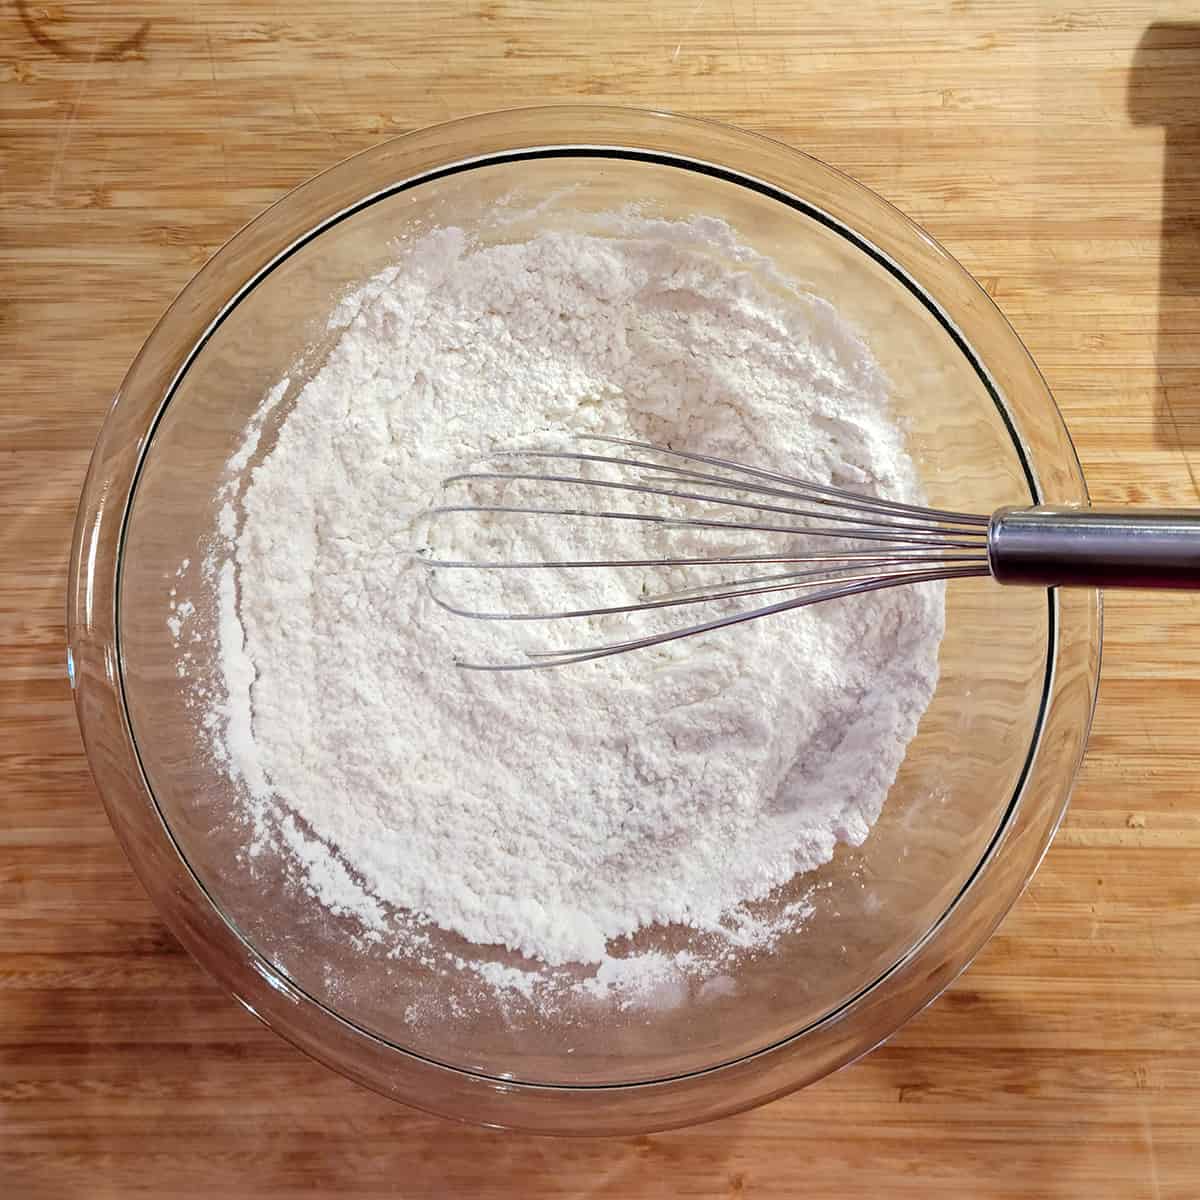 Flour, baking powder, sugar, and salt in a mixing bowl.